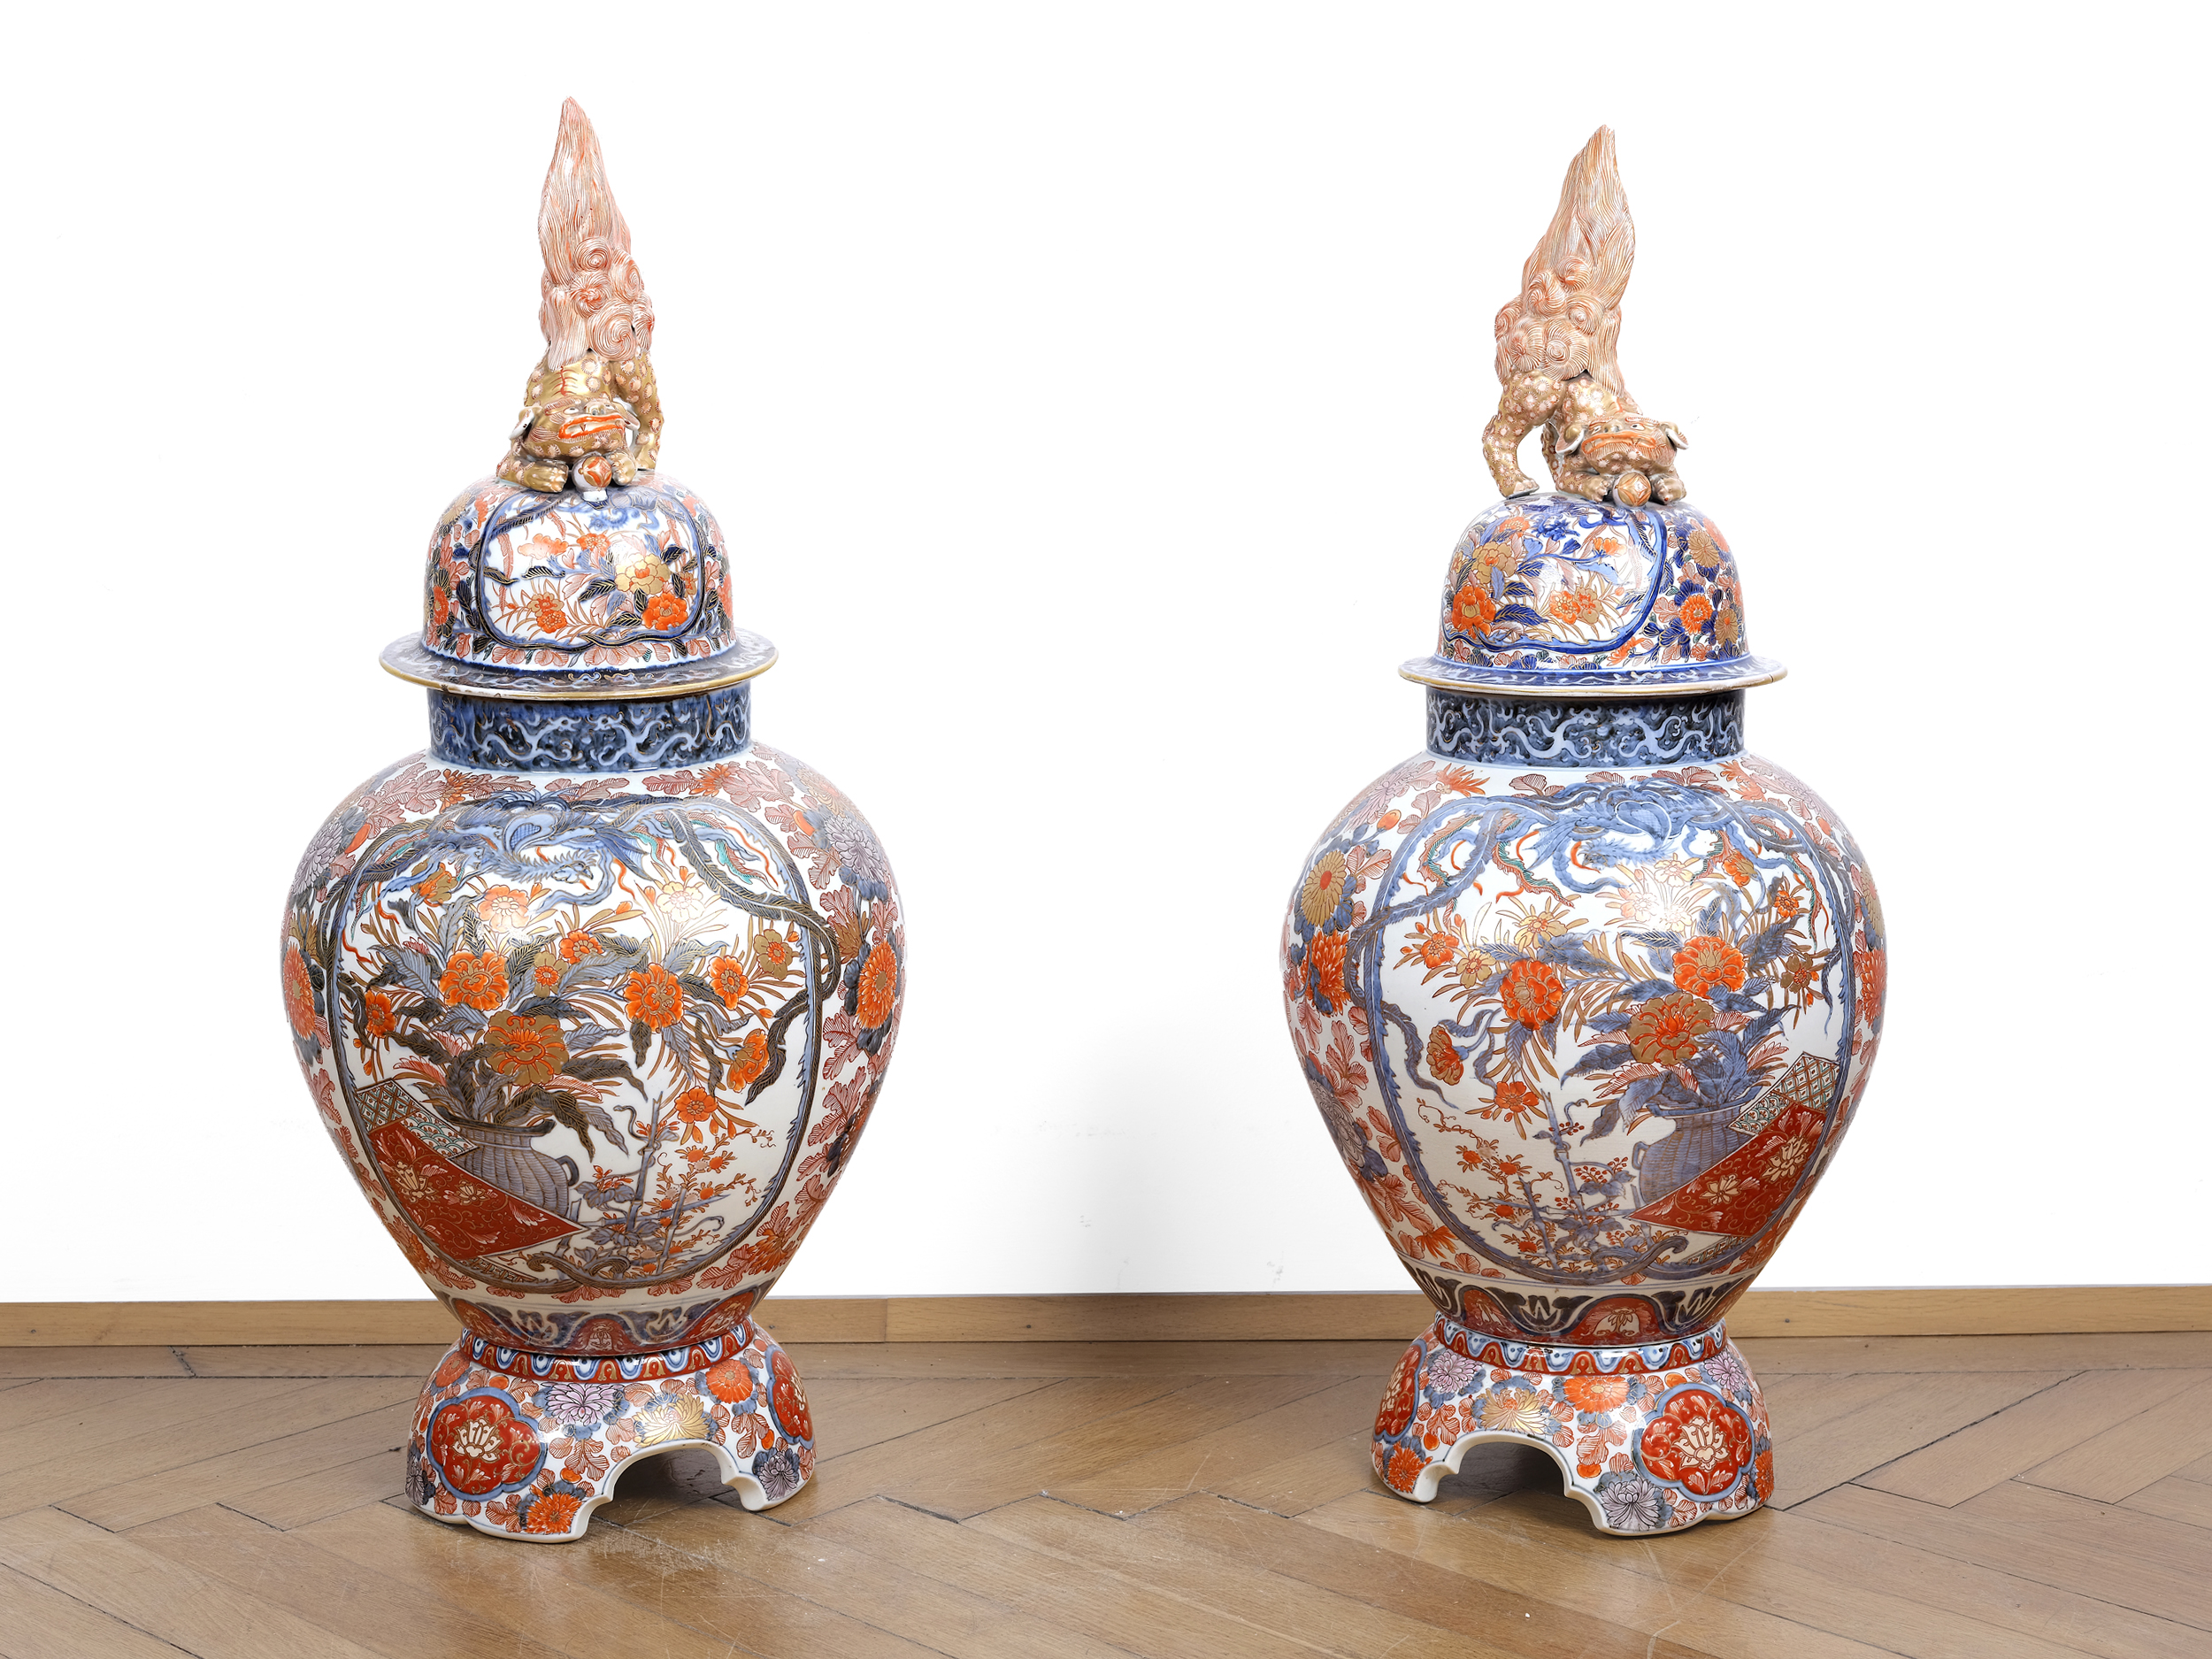 Pair of large Imari lidded vases, Japan, Meiji period, 1868-1912 - Image 2 of 3